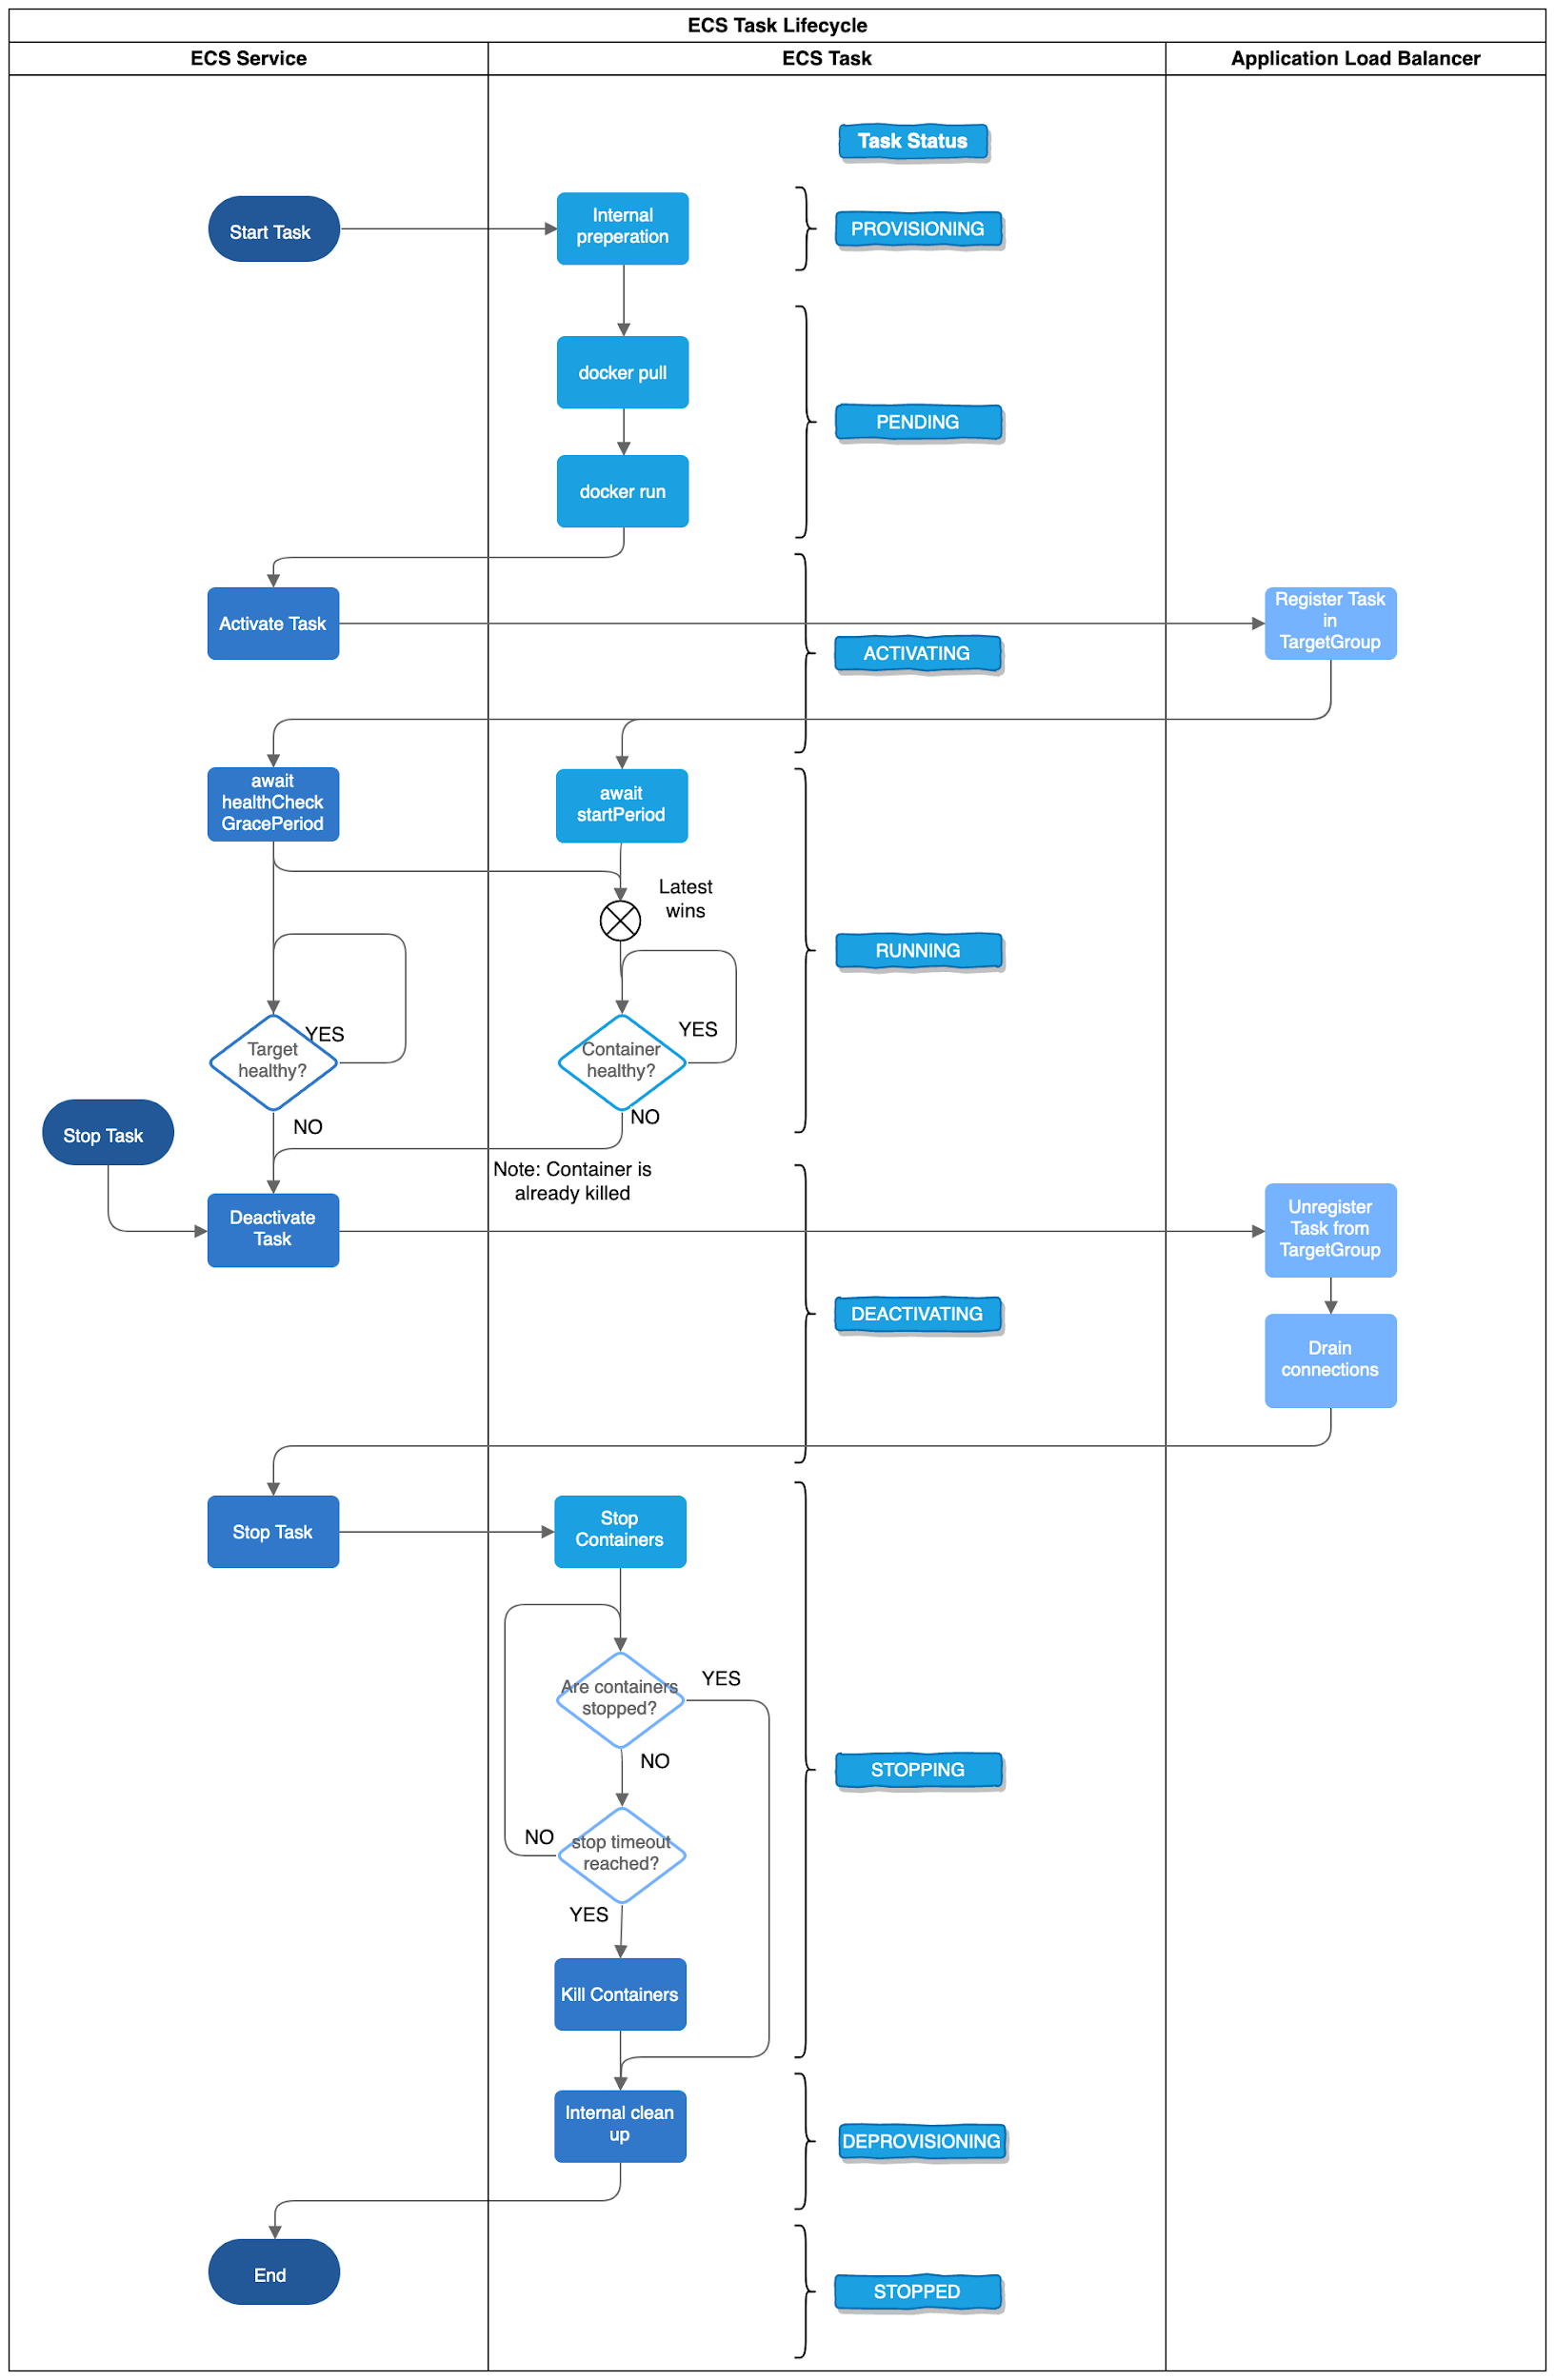 Lifecycle of an ECS Task